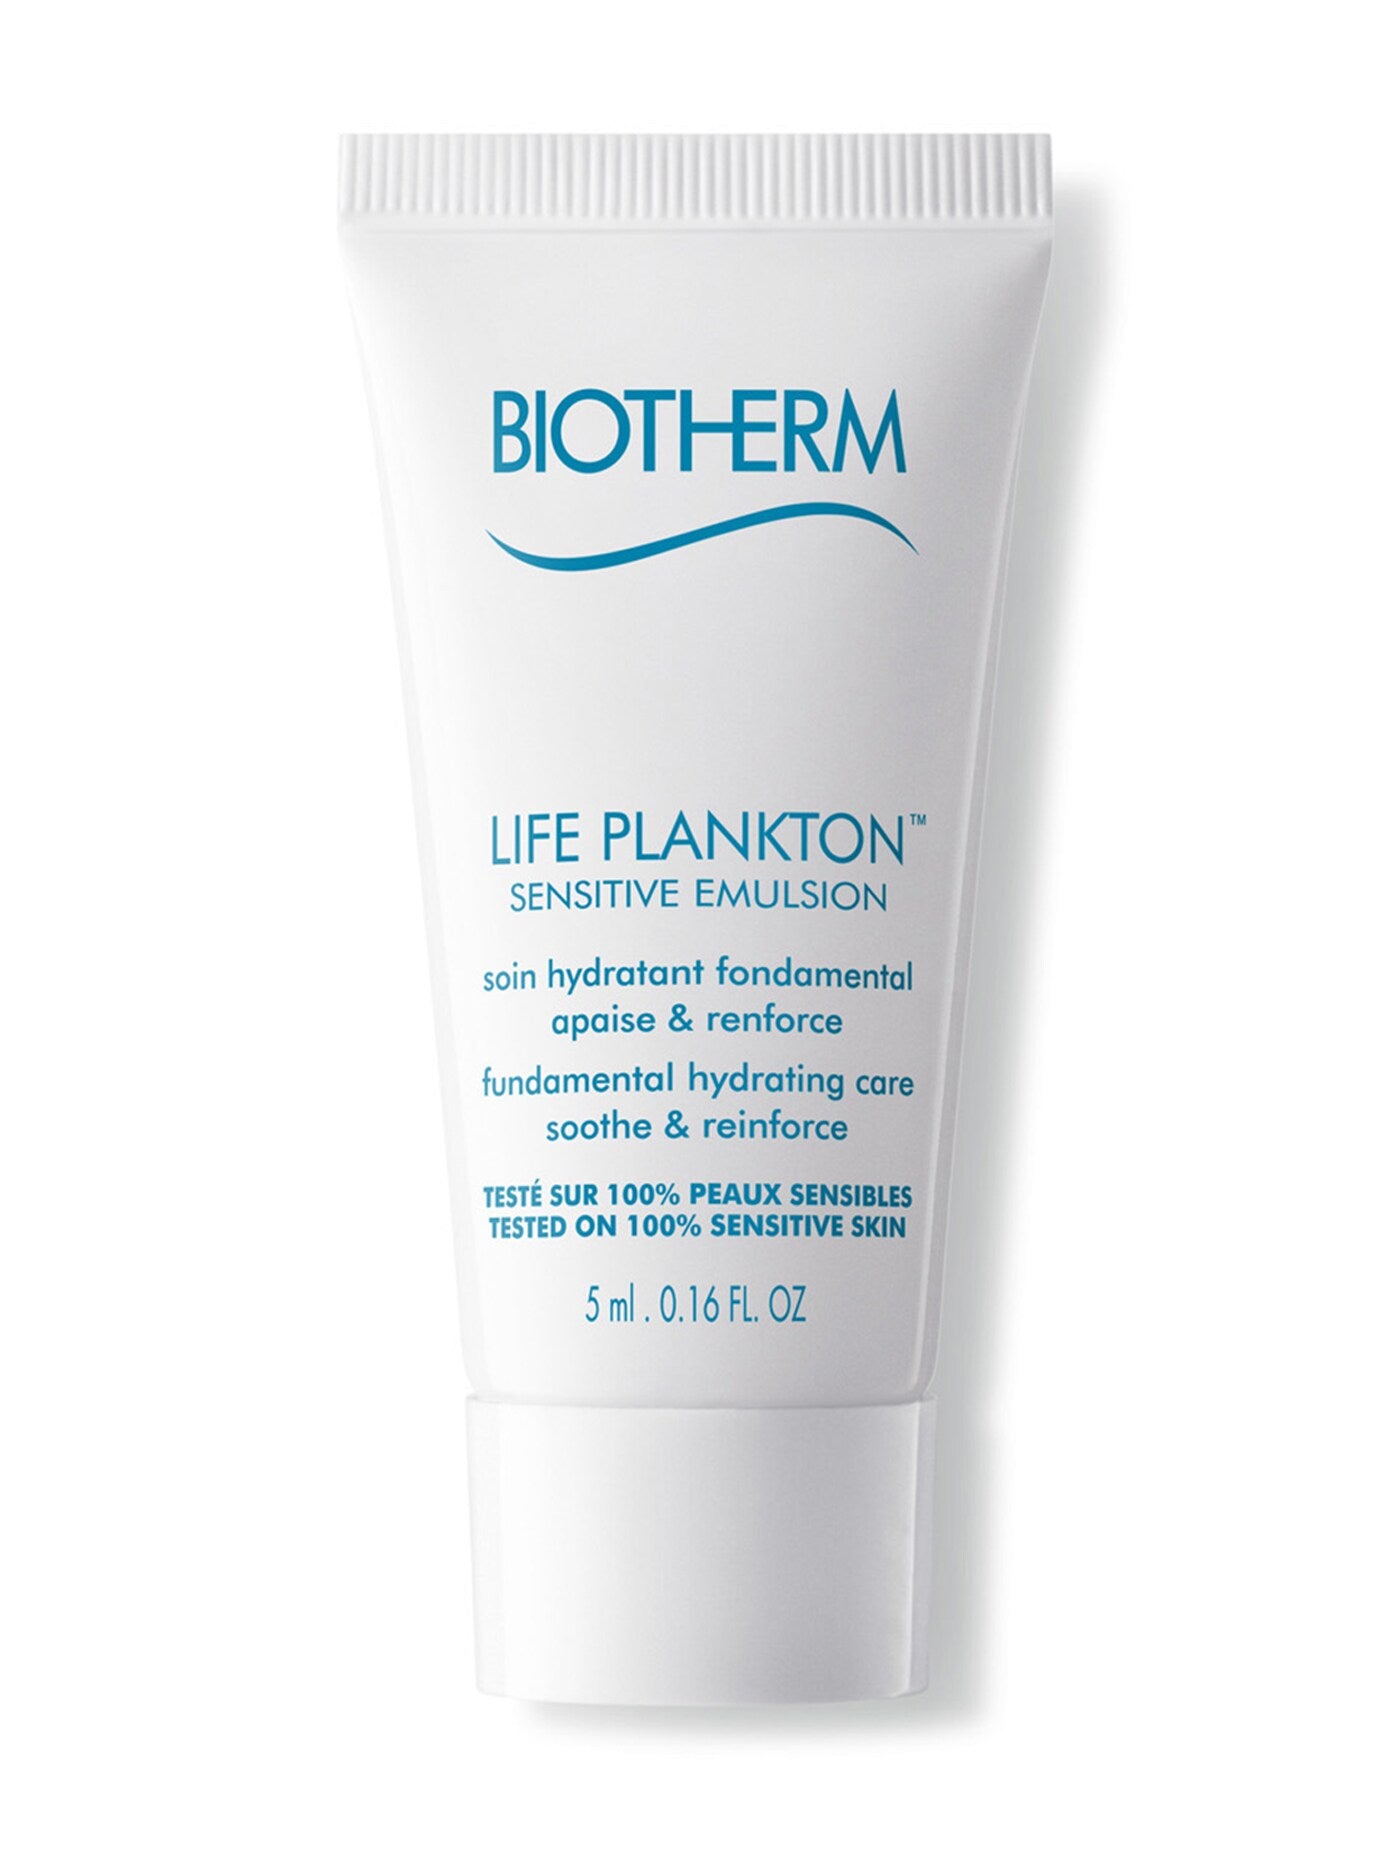 Life Plankton Sensitive Emulsion Soin Hydratant Fondamental Apaiser & Renforcer 5 Ml *S